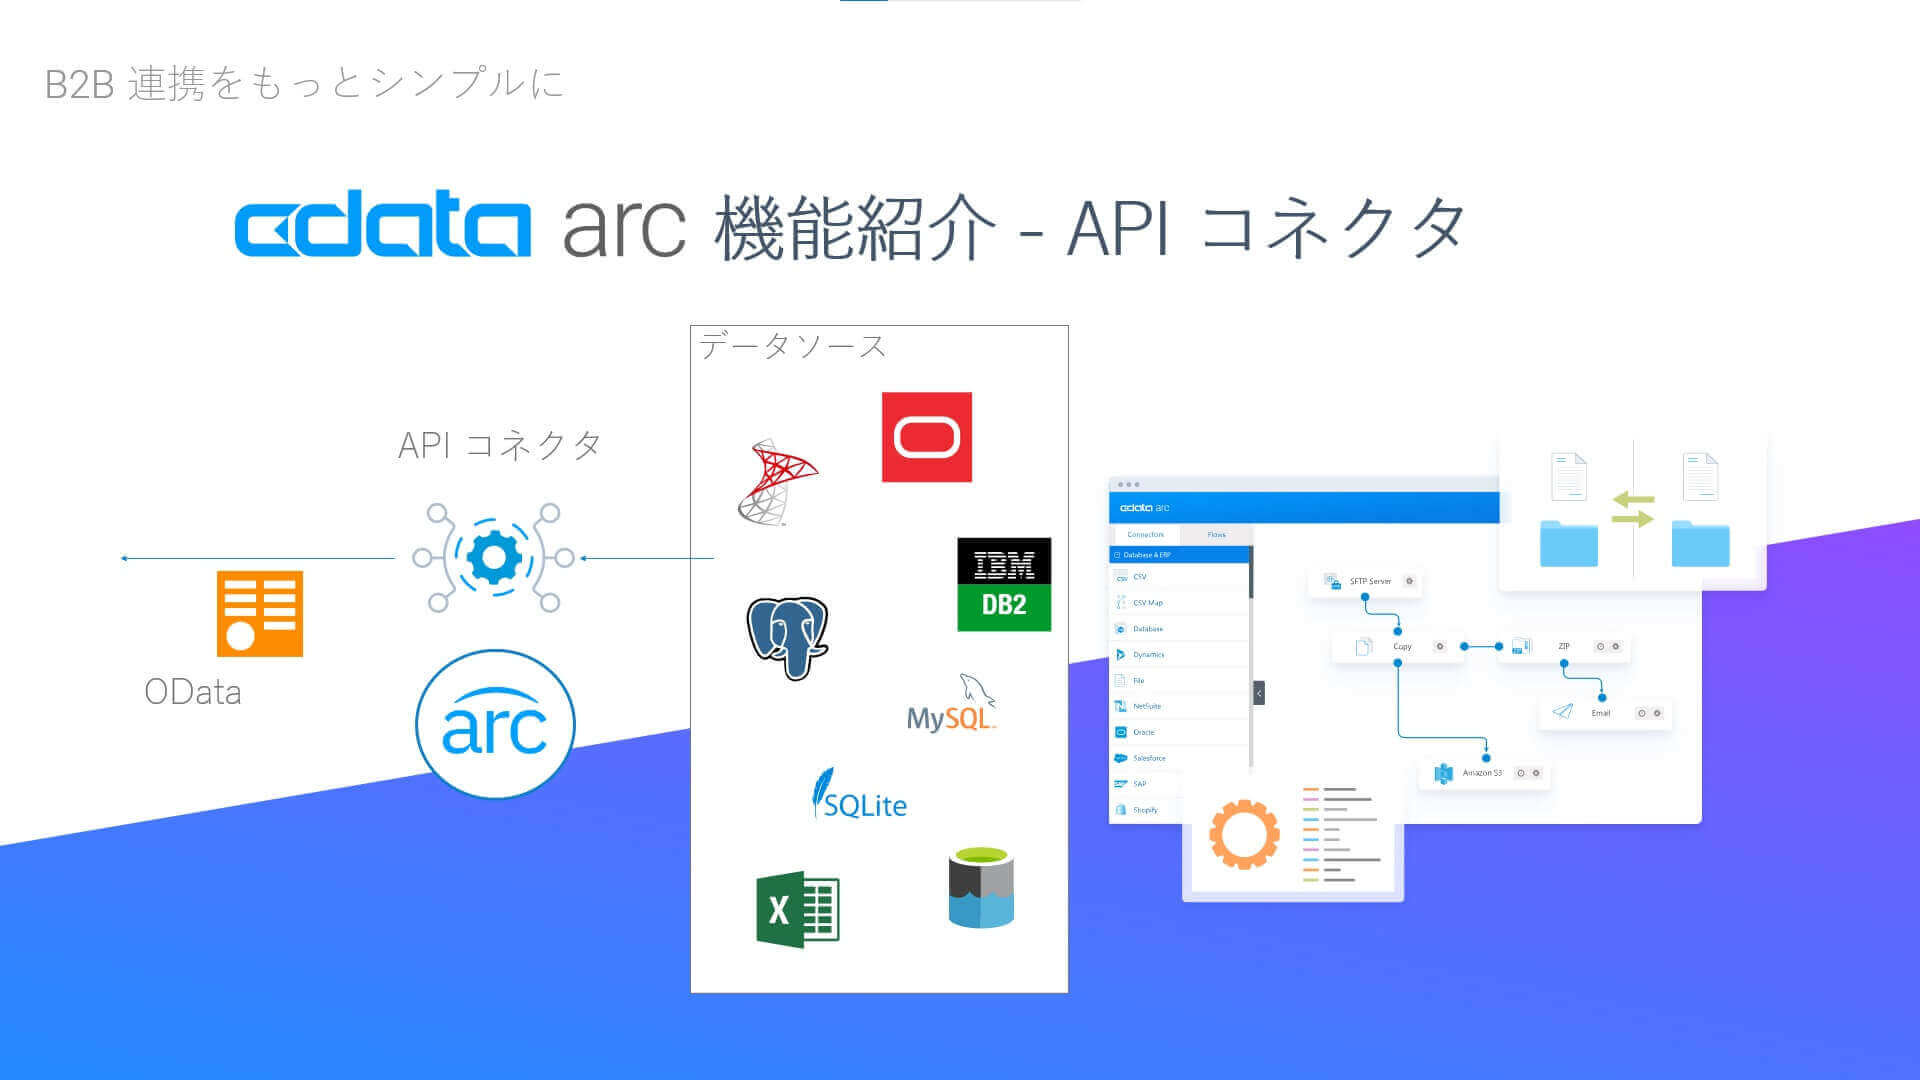 CData Arc 機能紹介 - API コネクタ